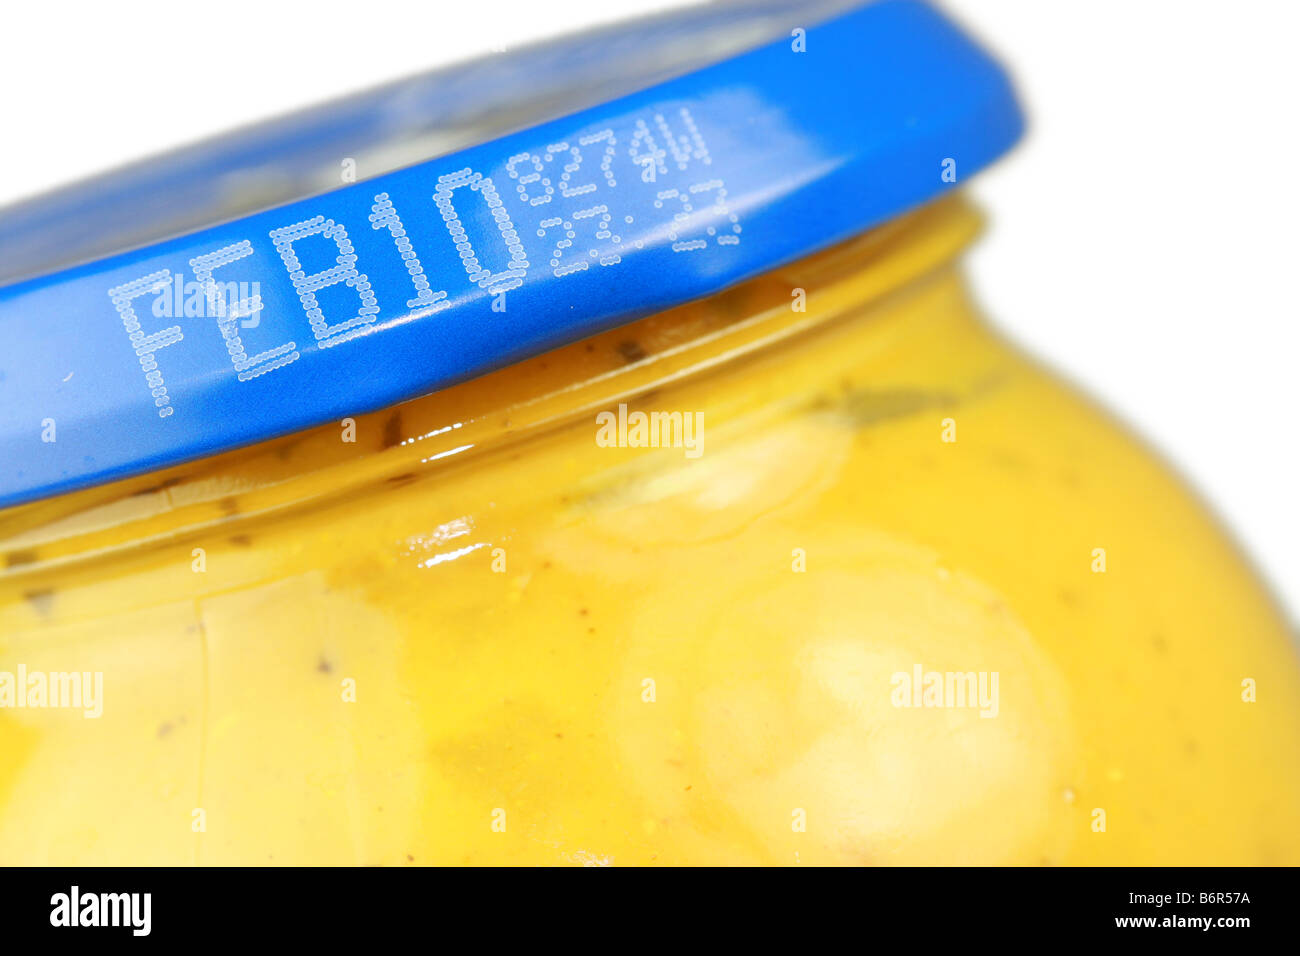 'Best before end' information printed on lid of food jar Stock Photo